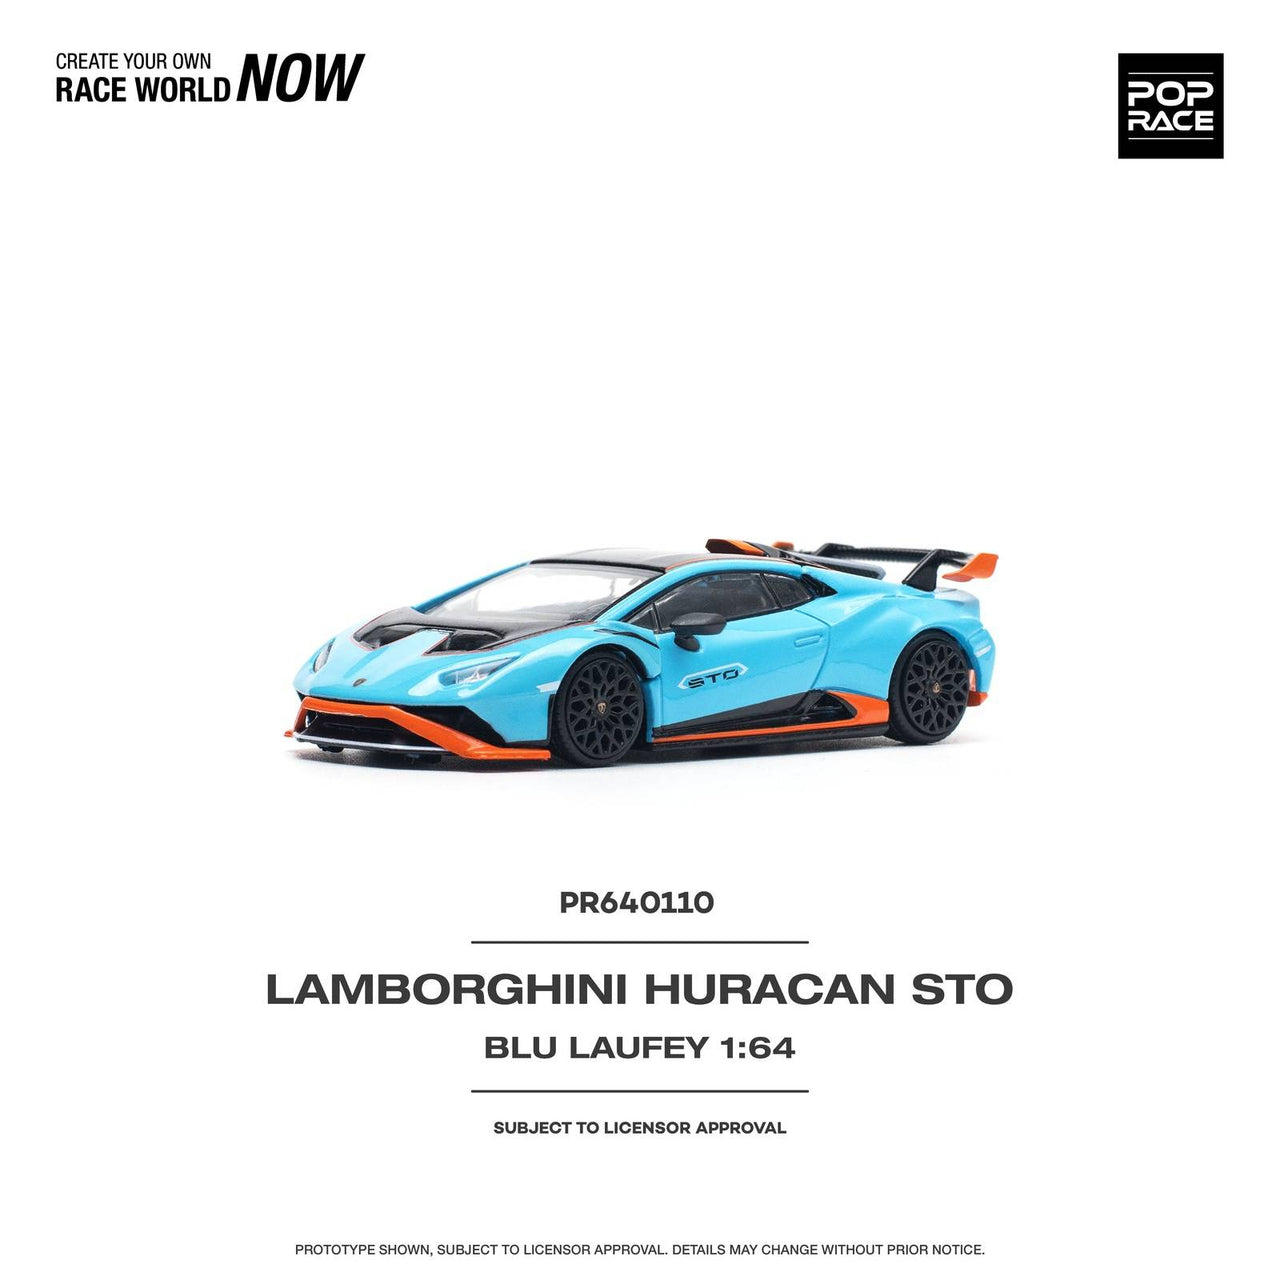 PRE-ORDER Pop Race 1:64 Lamborghini Huracan STO Blu Laufey/Arancio Xanto